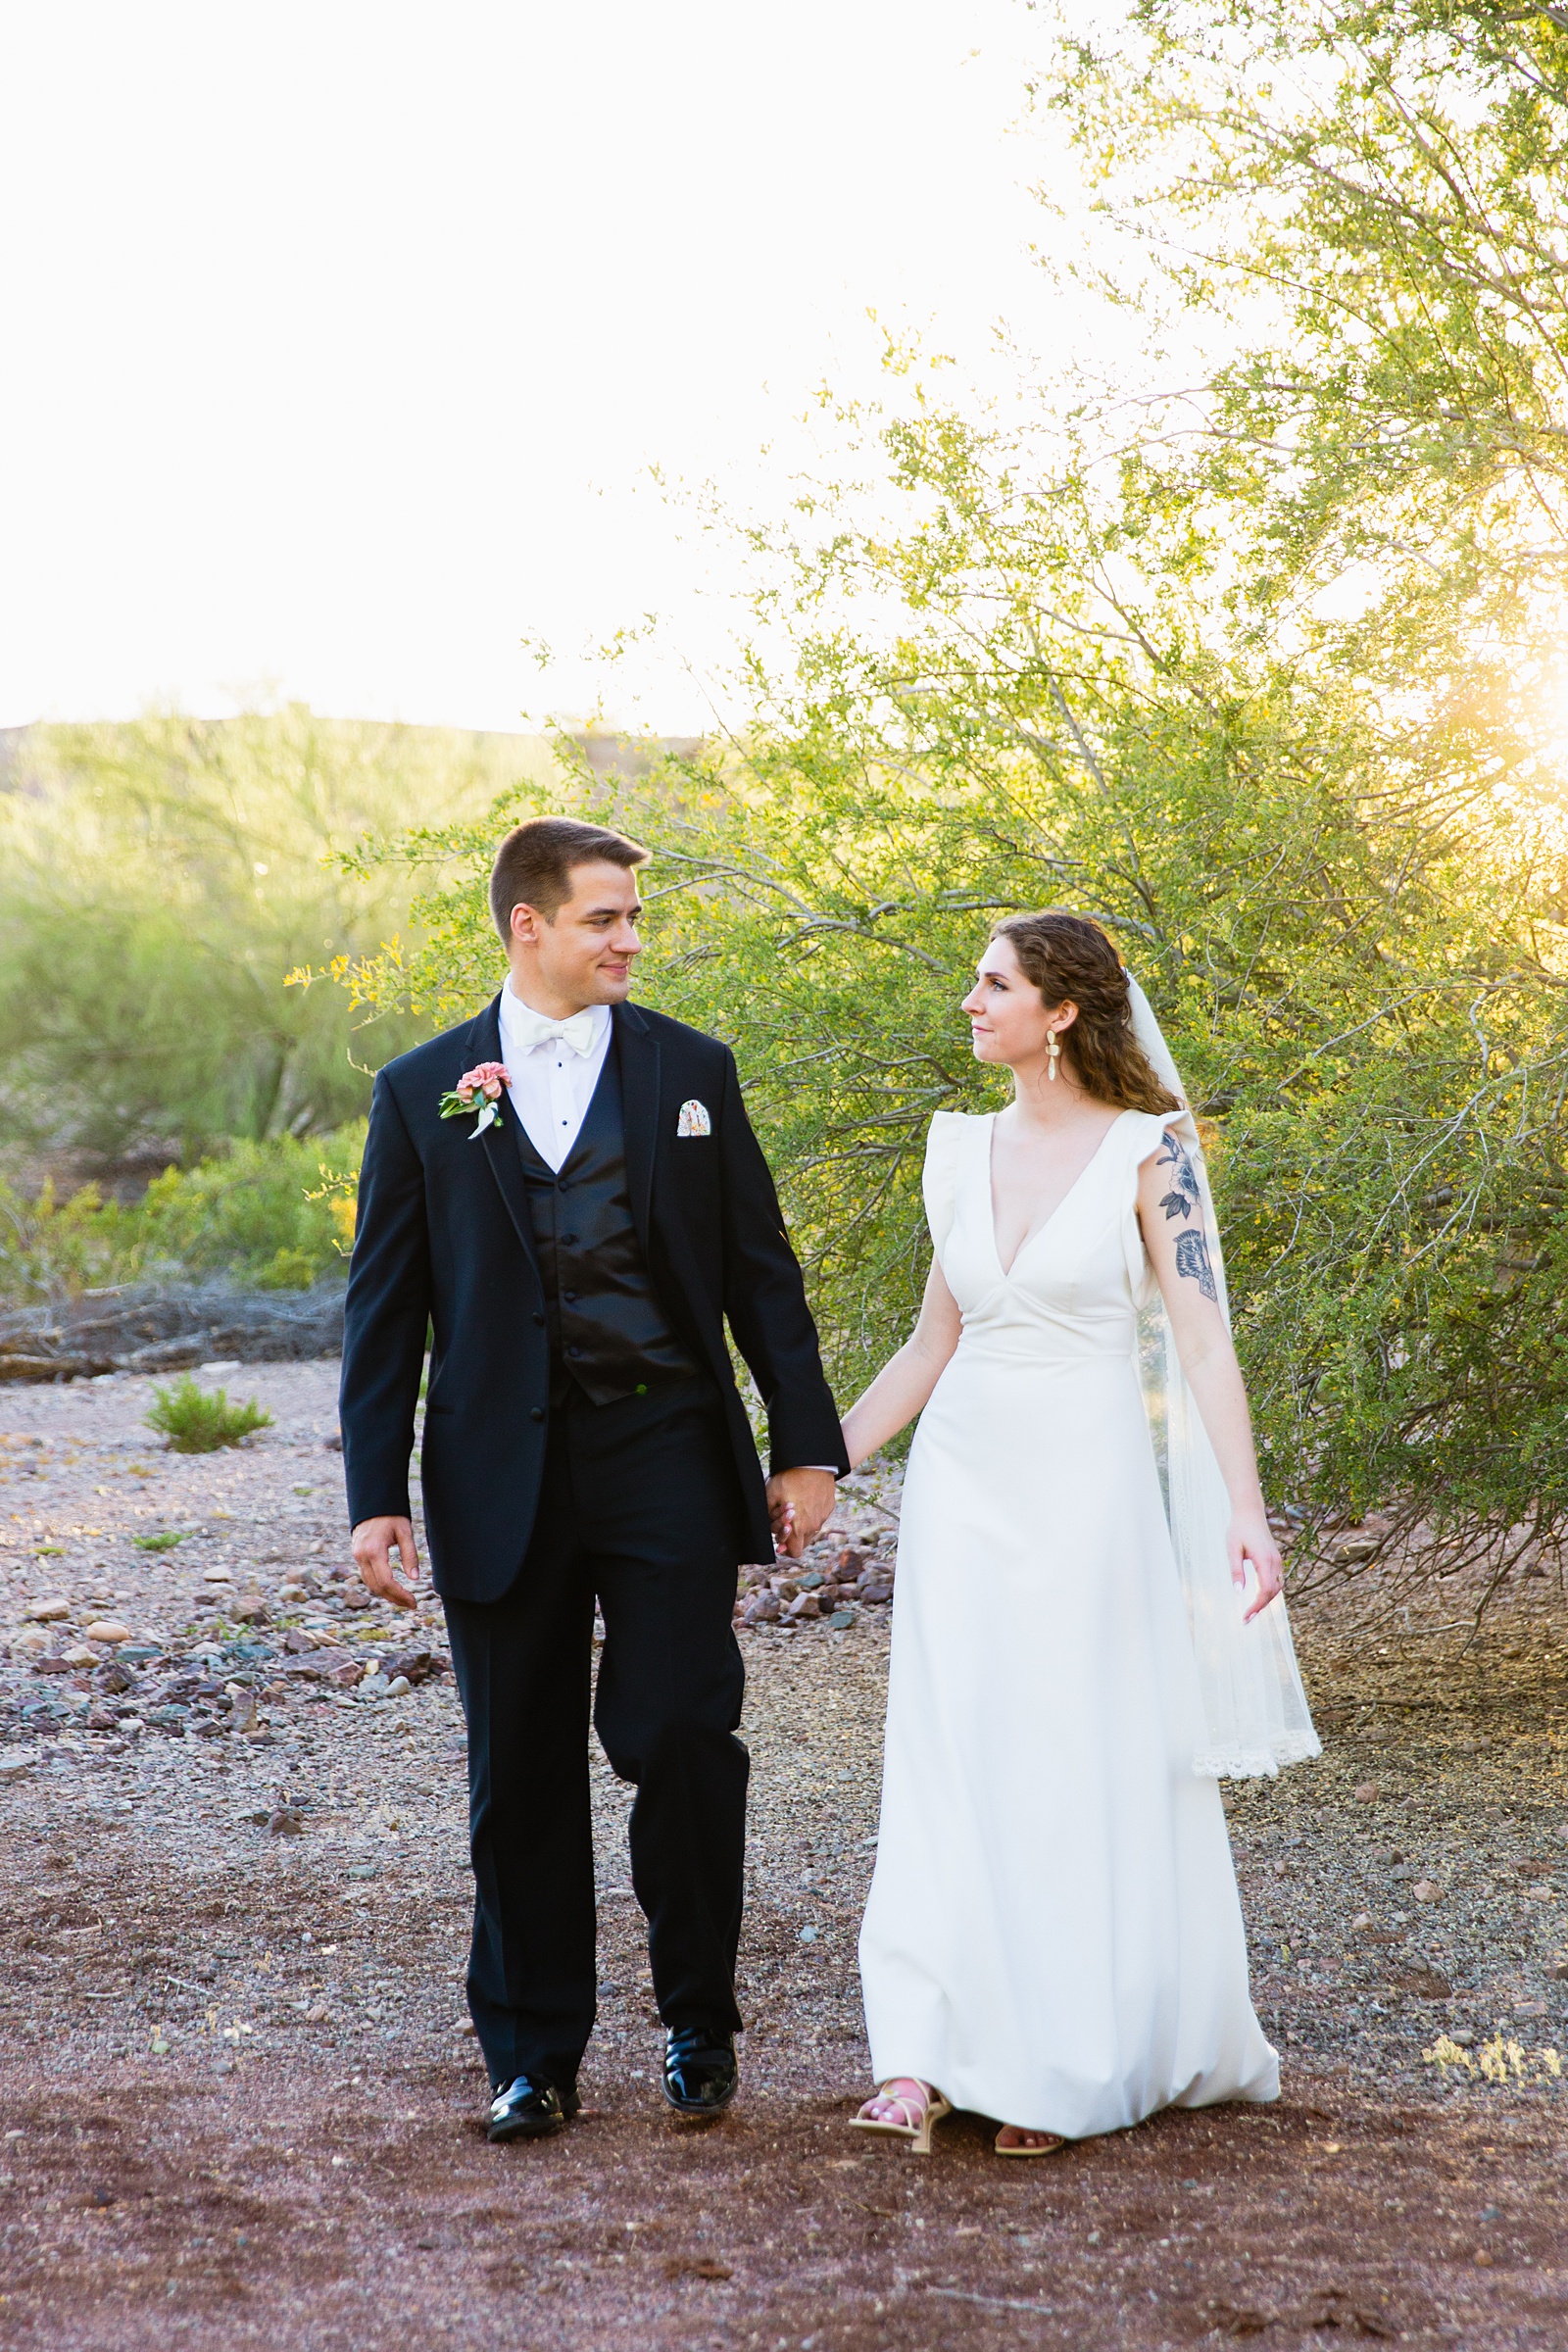 Bride and groom walking together during their Arizona Historical Society wedding by Arizona wedding photographer PMA Photography.